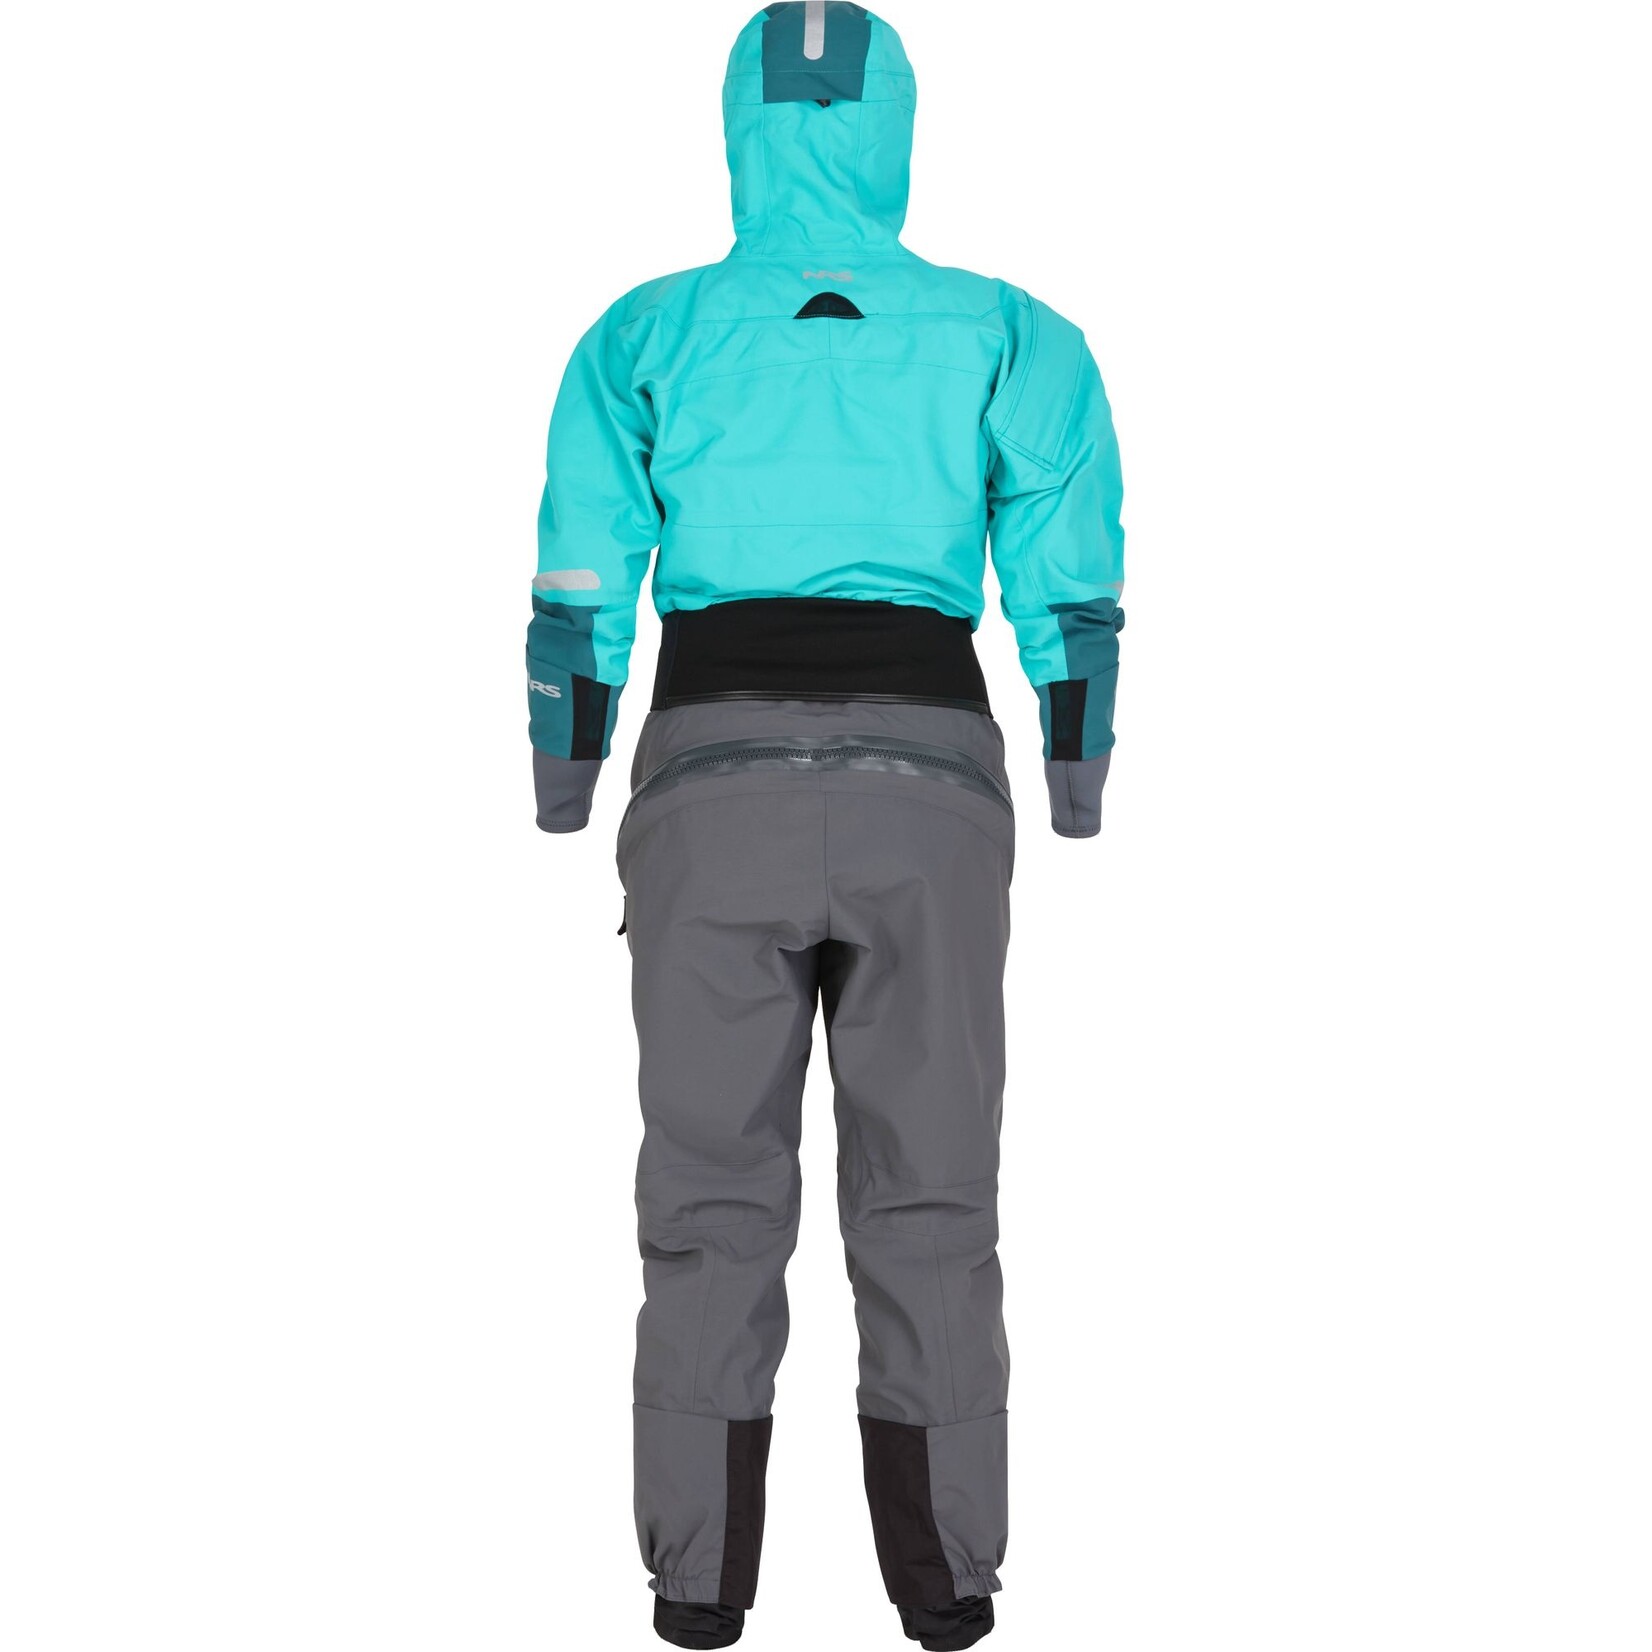 NRS - Women's Navigator GORE-TEX Pro Semi-Dry Suit